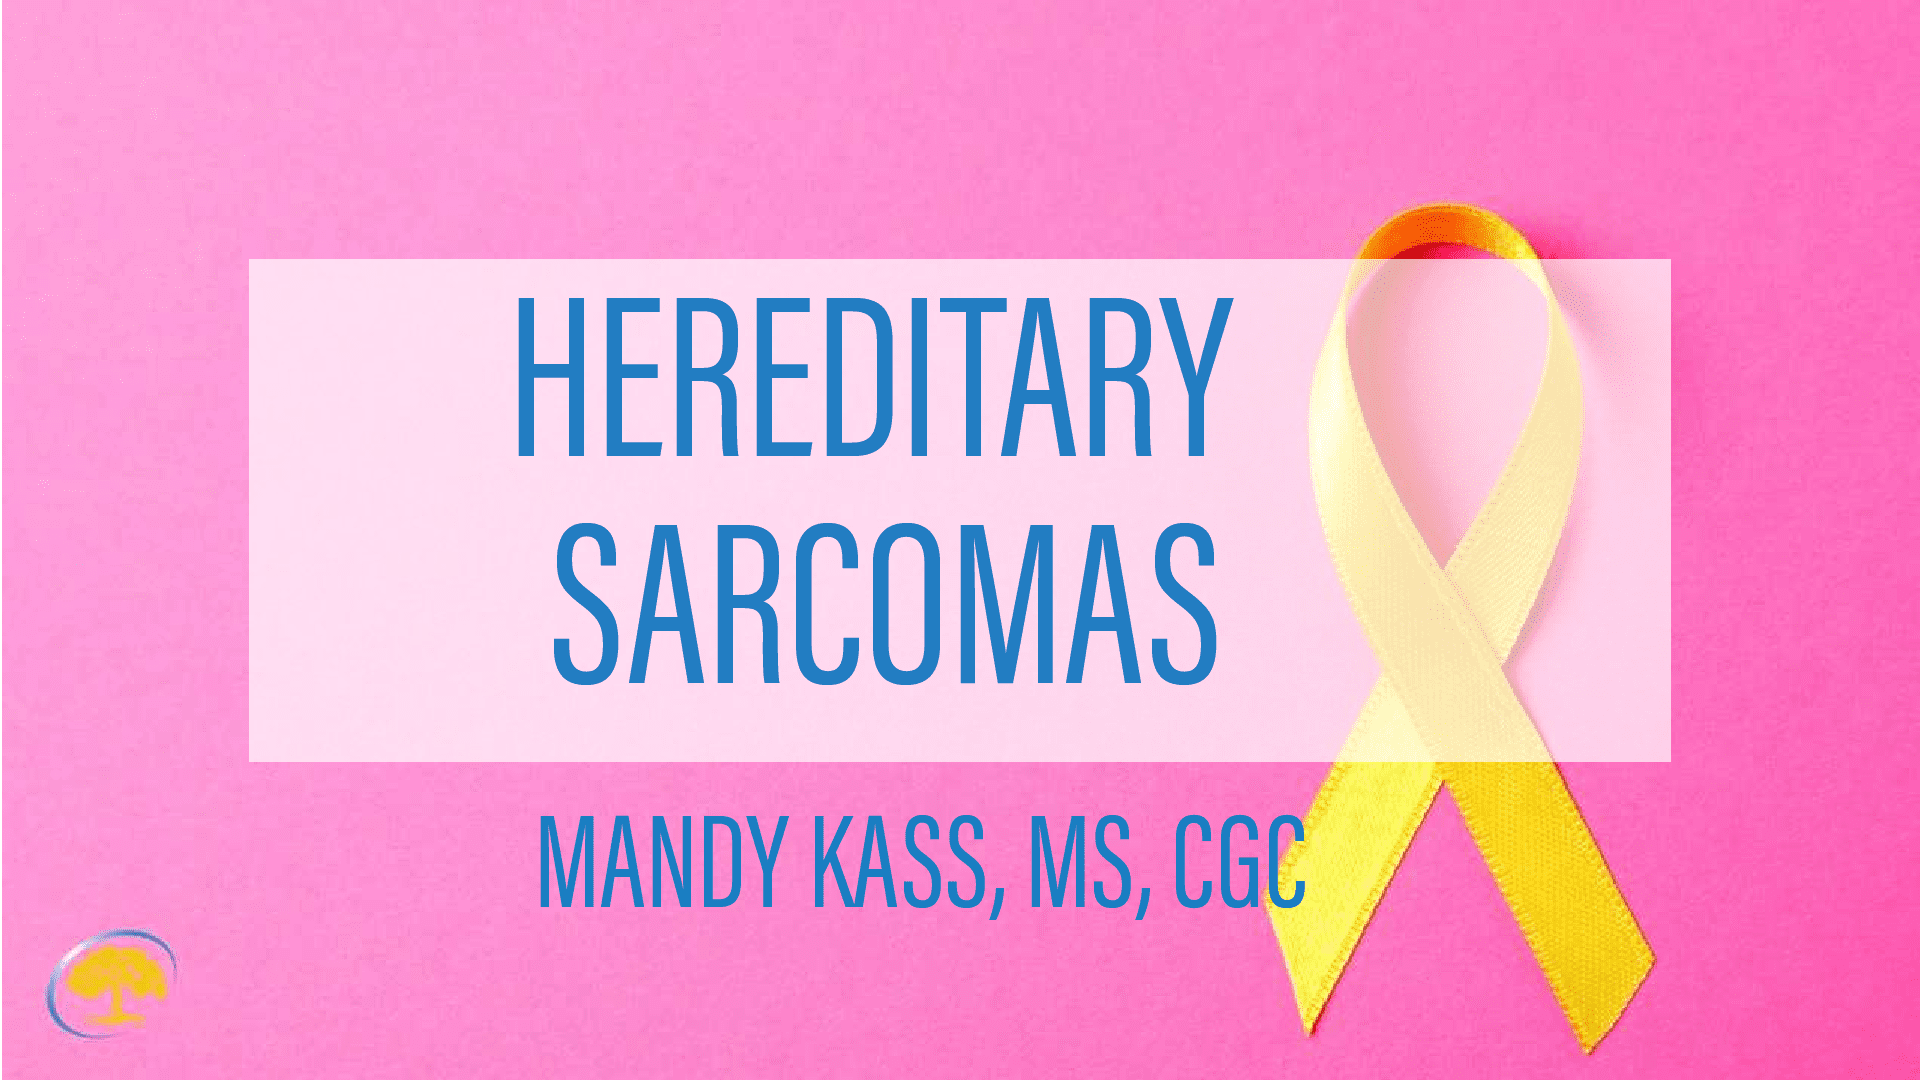 Hereditary Sarcomas